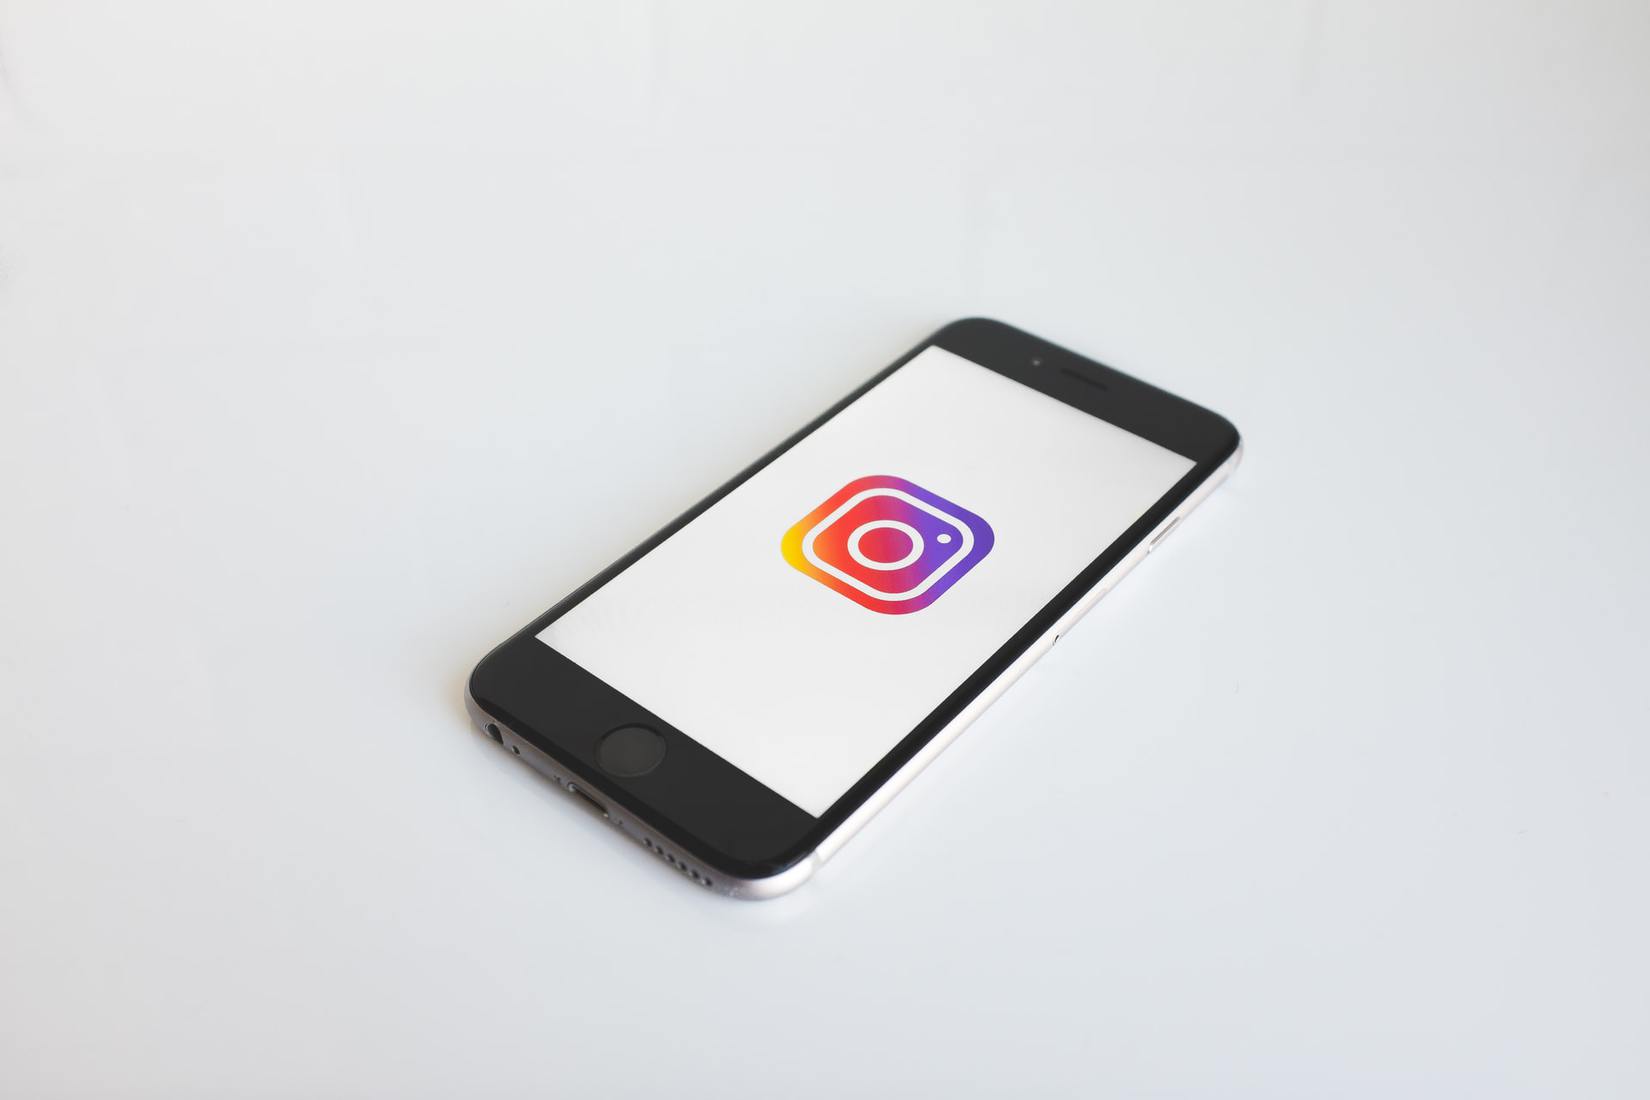 Instagram logo on iPhone